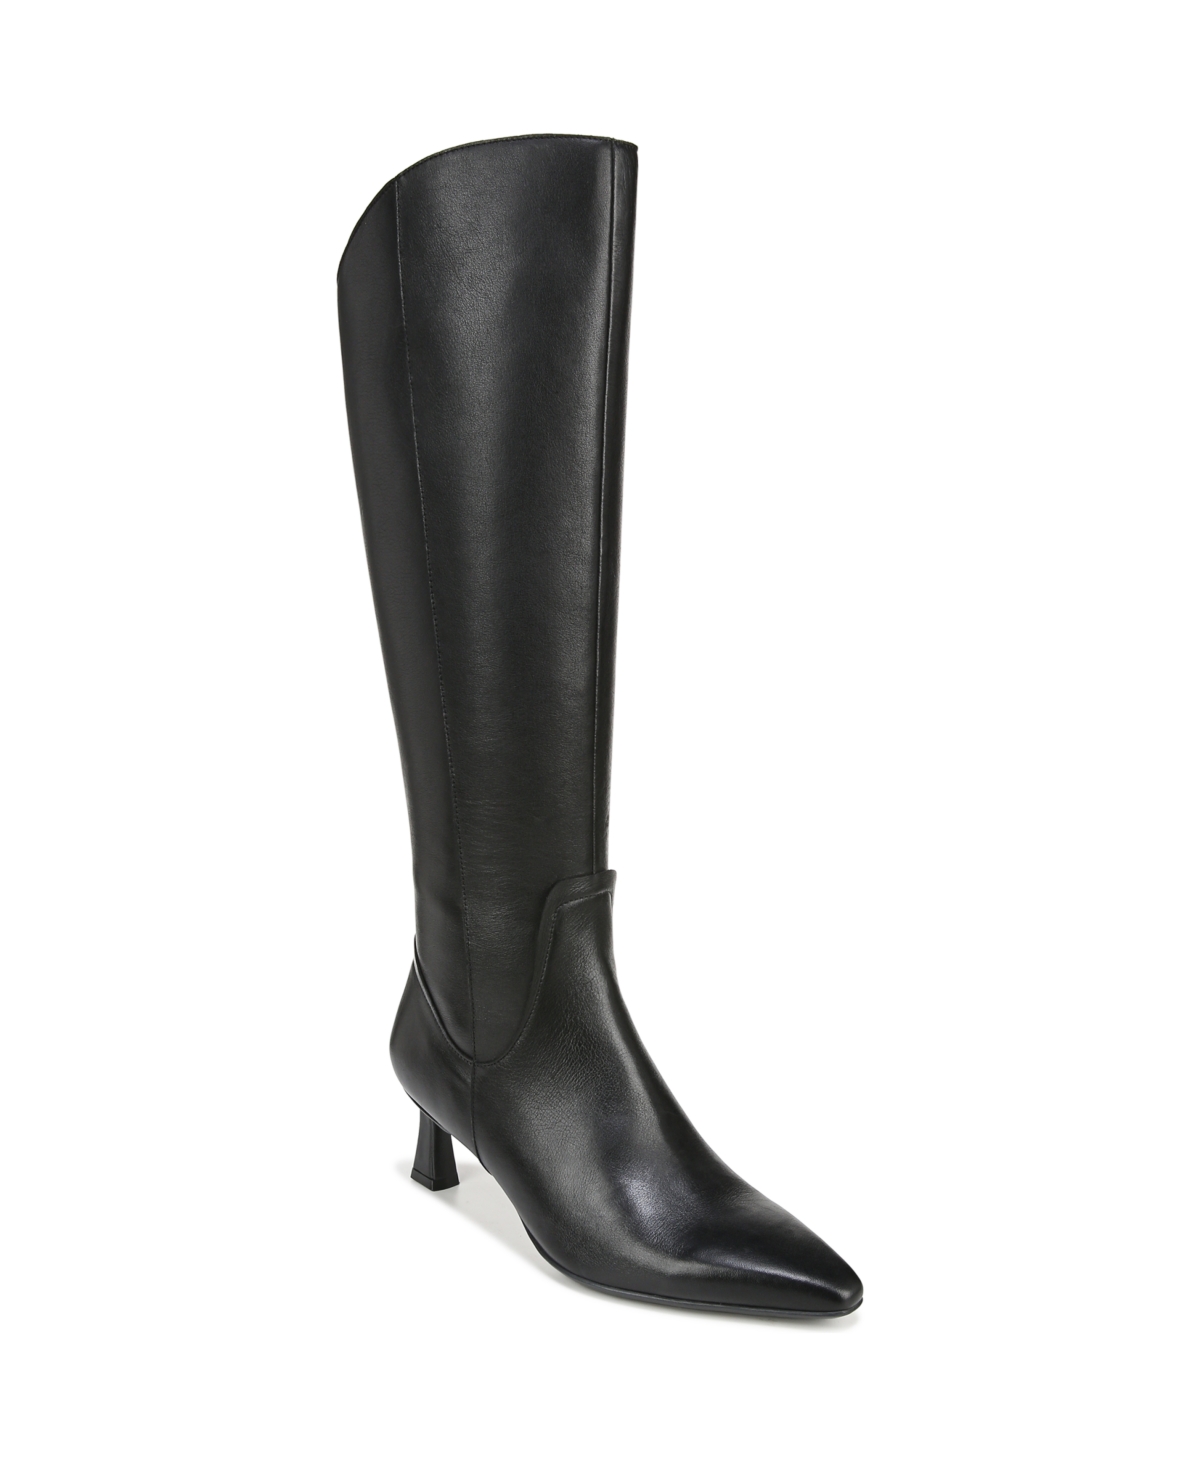 Deesha Narrow Calf Tall Dress Boots - Black Leather